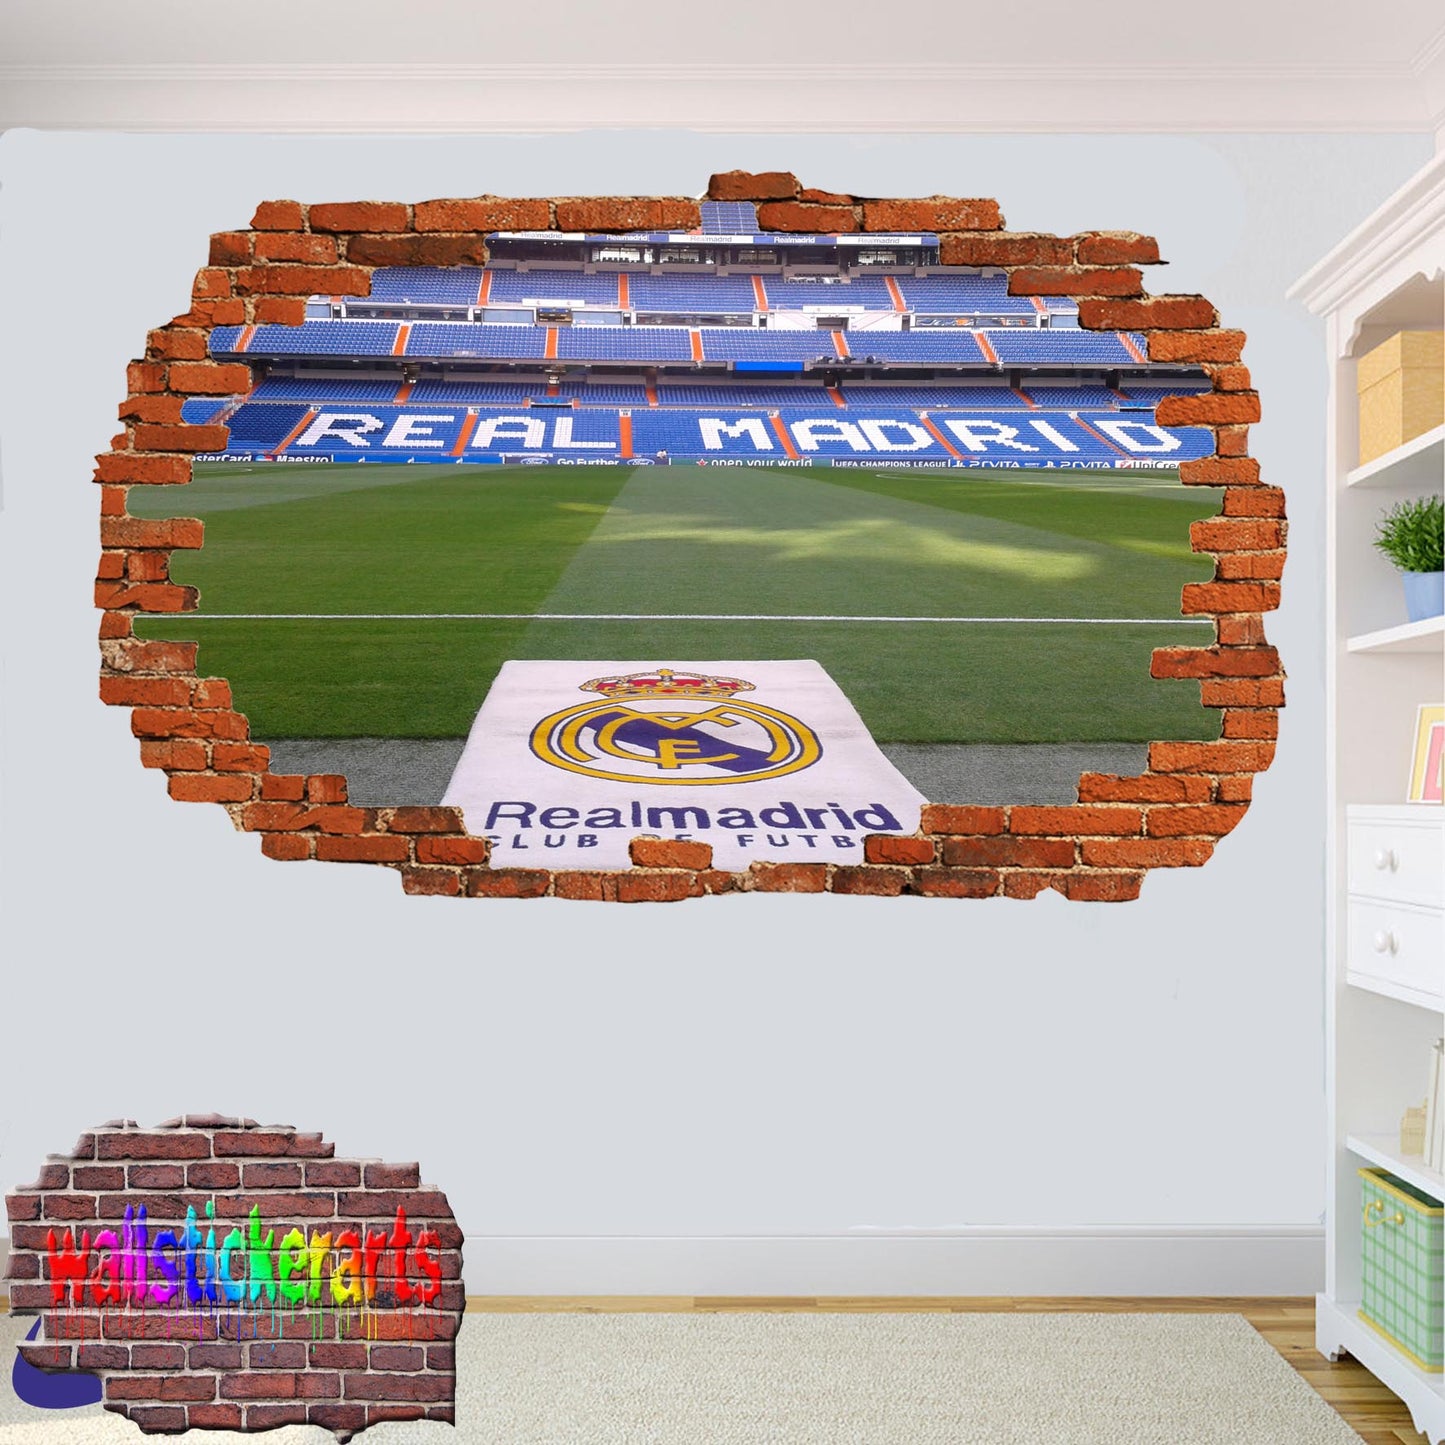 Real Madrid Football Stadium Bernabeu 3d Smashed Wall Sticker Room Decor Decal Mural XE7